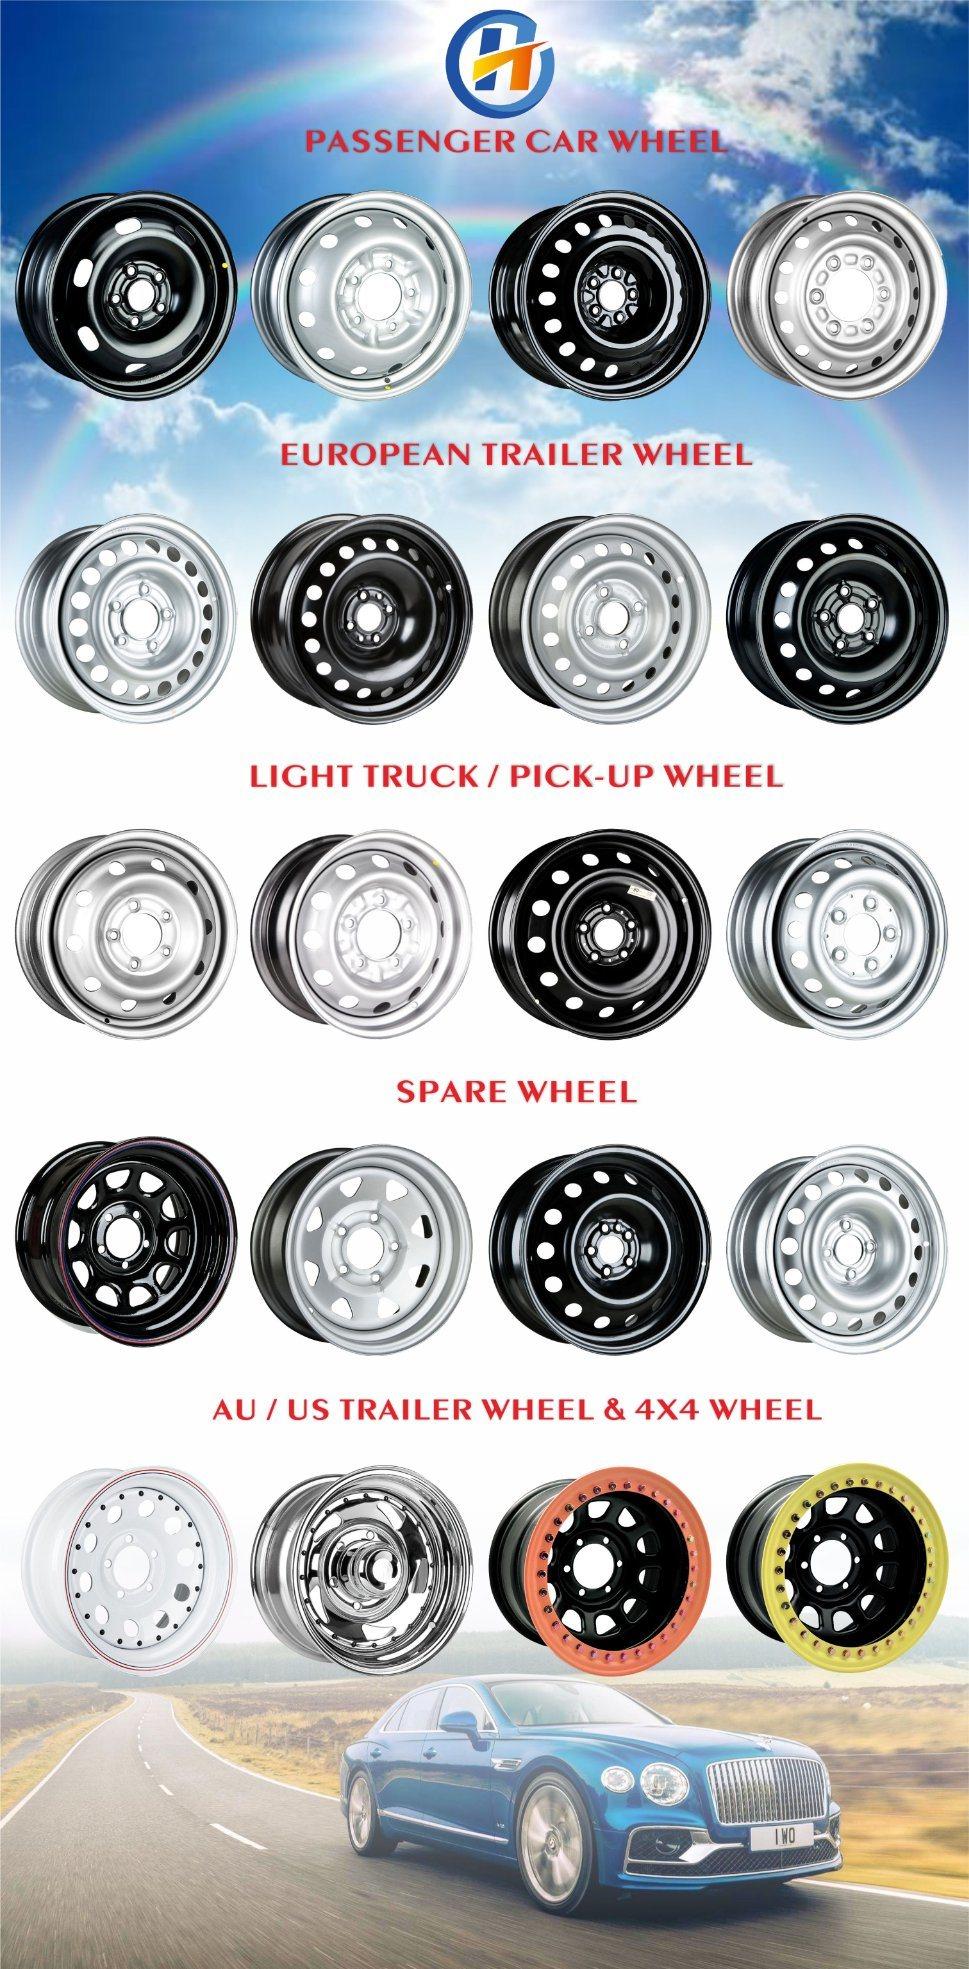 H&T Wheel 675602 16X6.5 5X112 Popular Design 16 Inch Black Steel Wheel Rims